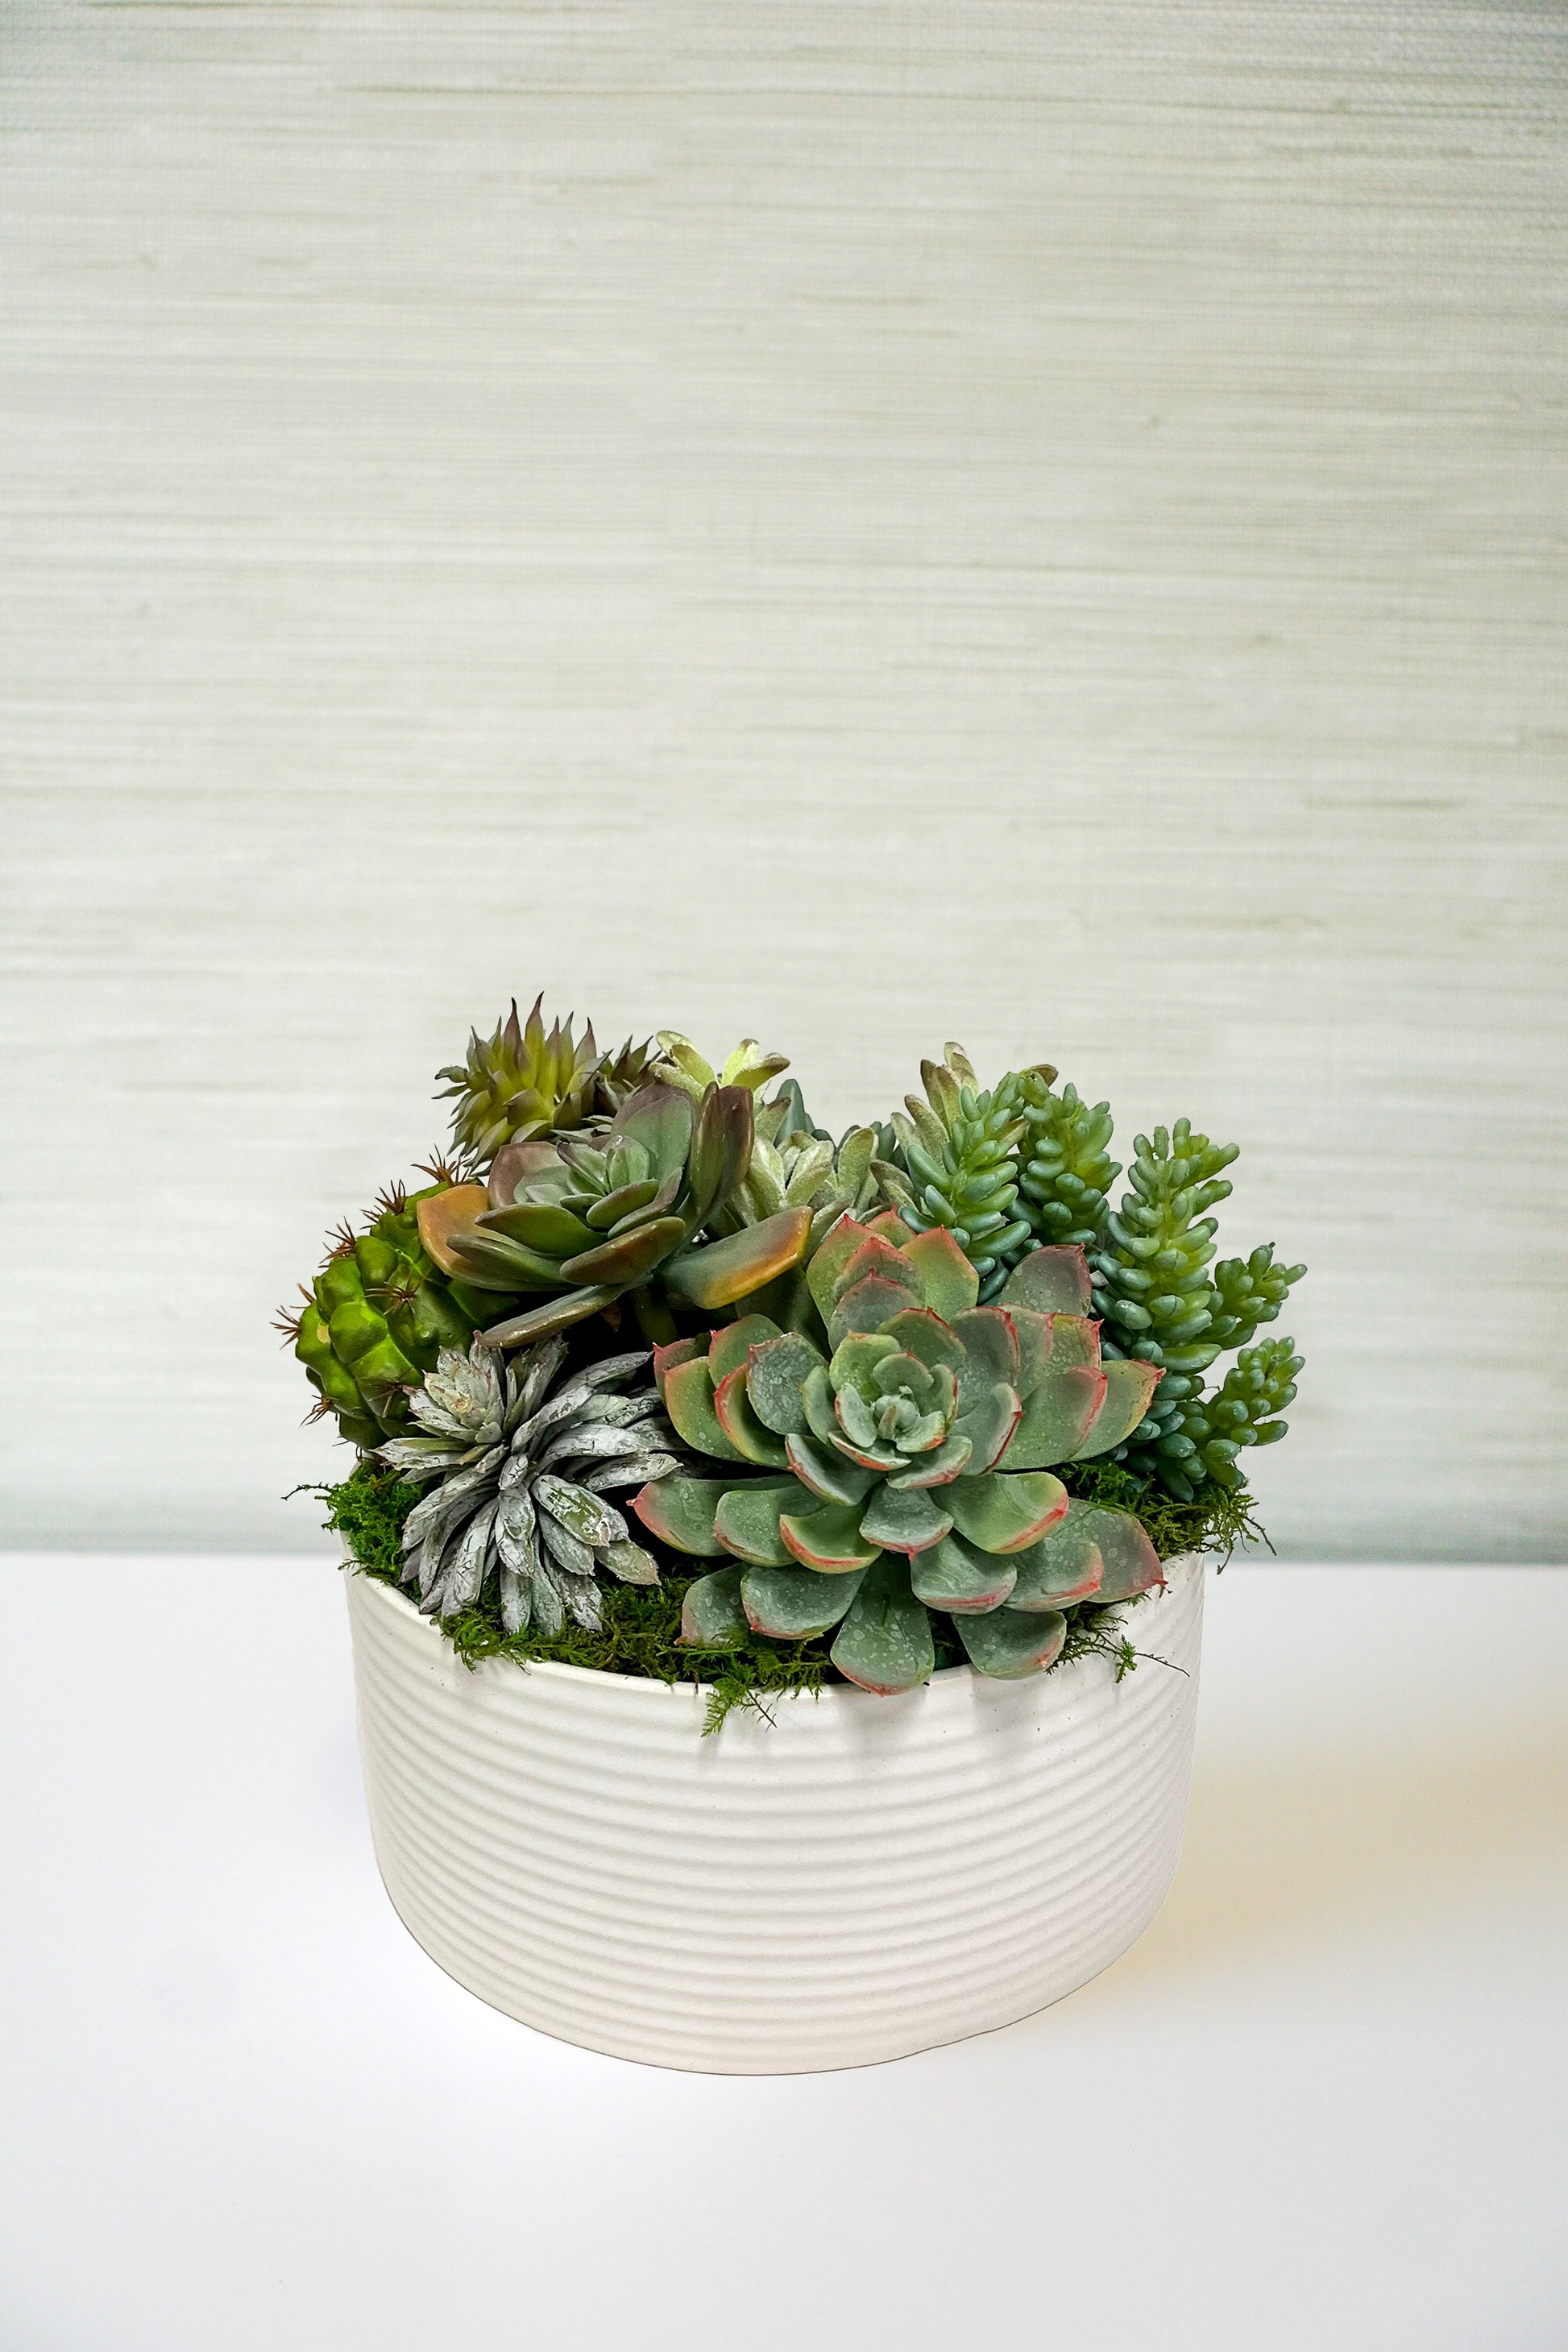 Decatur Bowl with Succulents